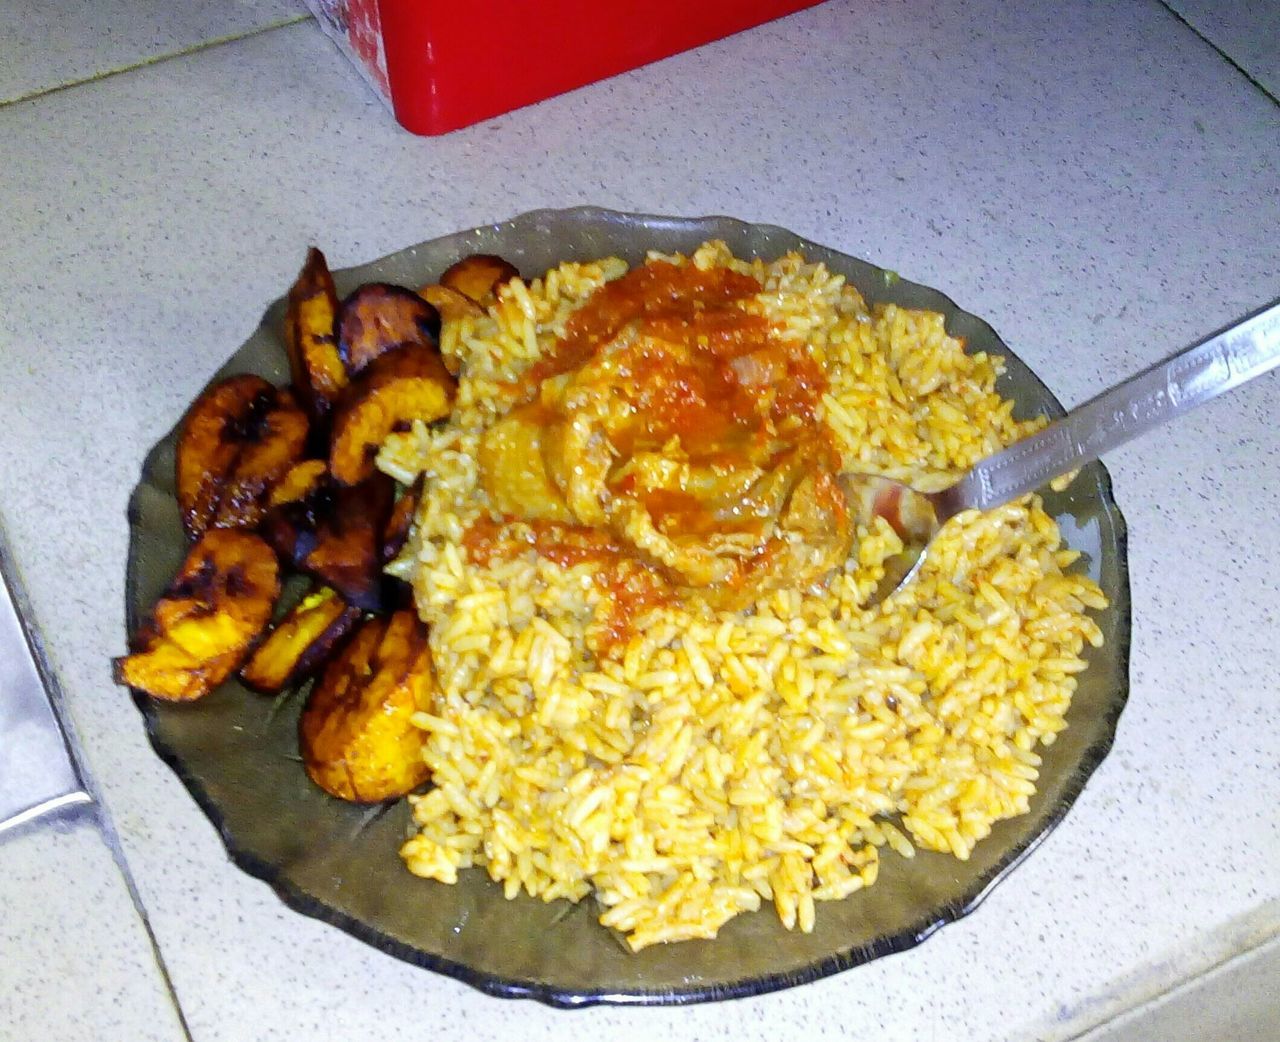 Nigerian Food